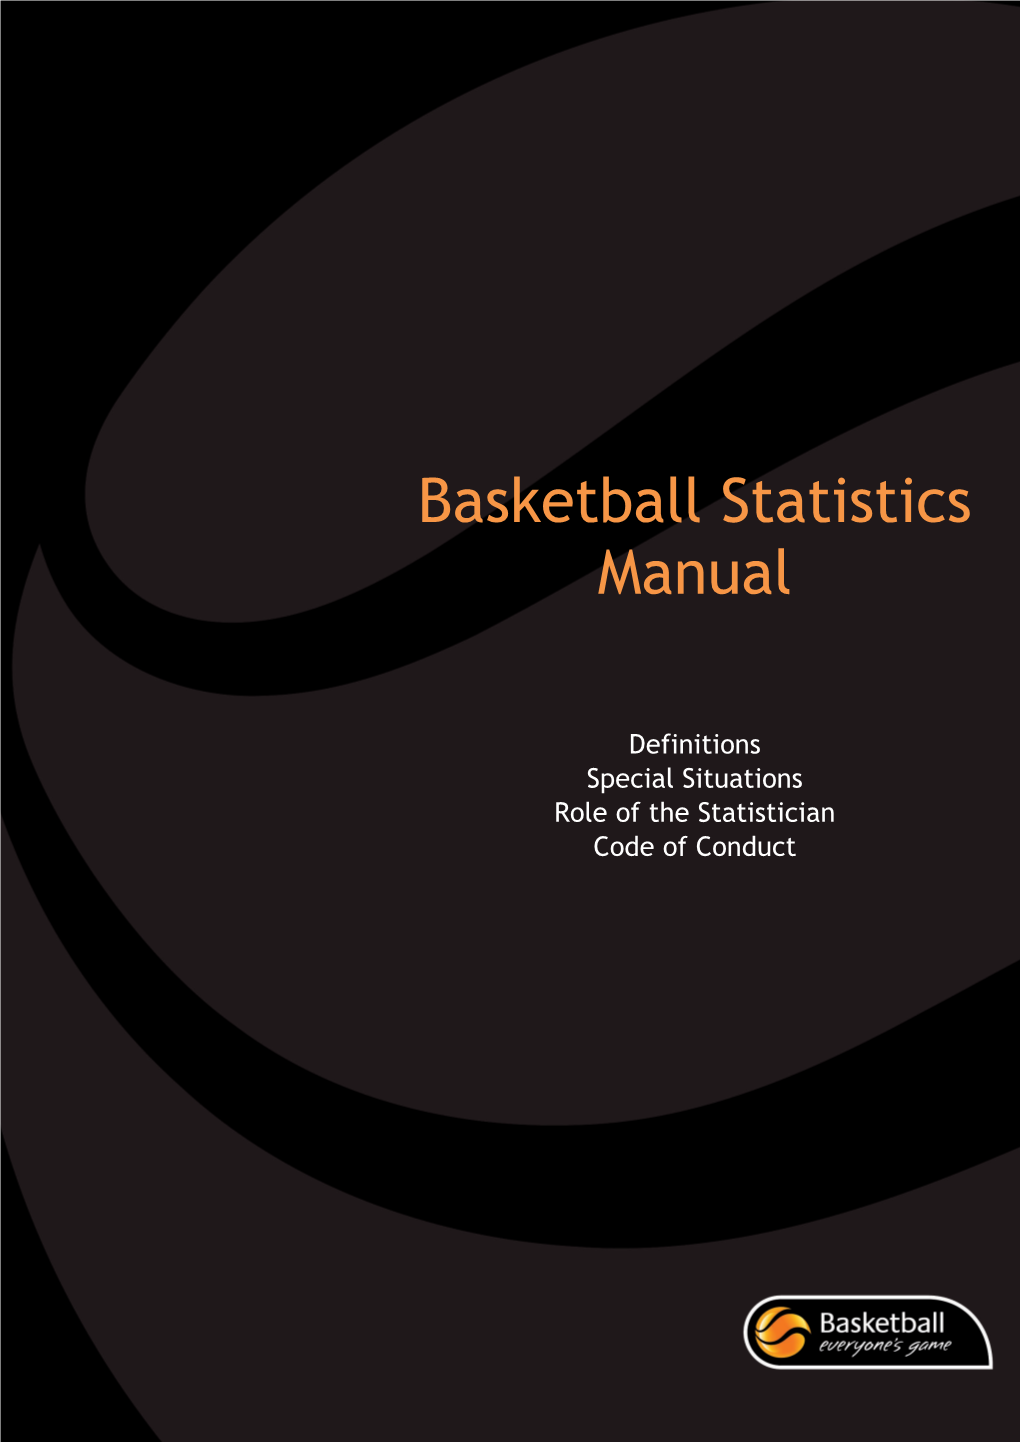 Basketball Statistics Association